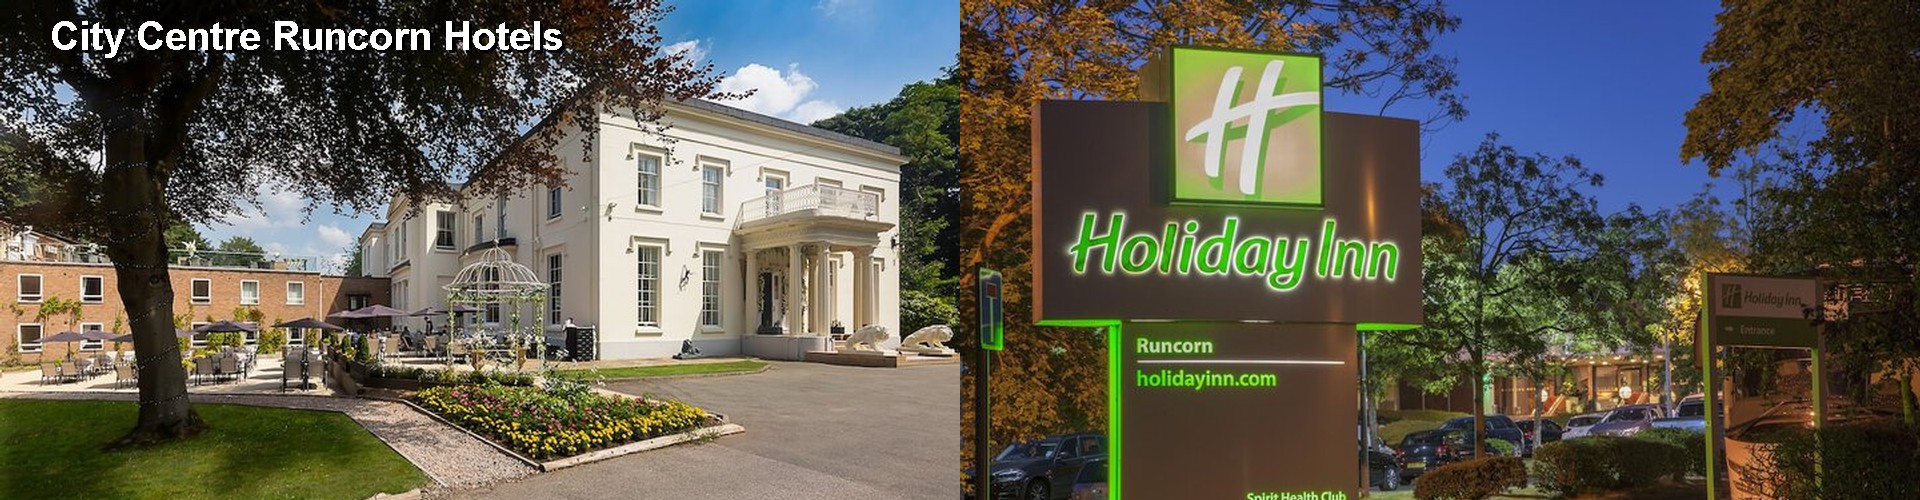 2 Best Hotels near City Centre Runcorn